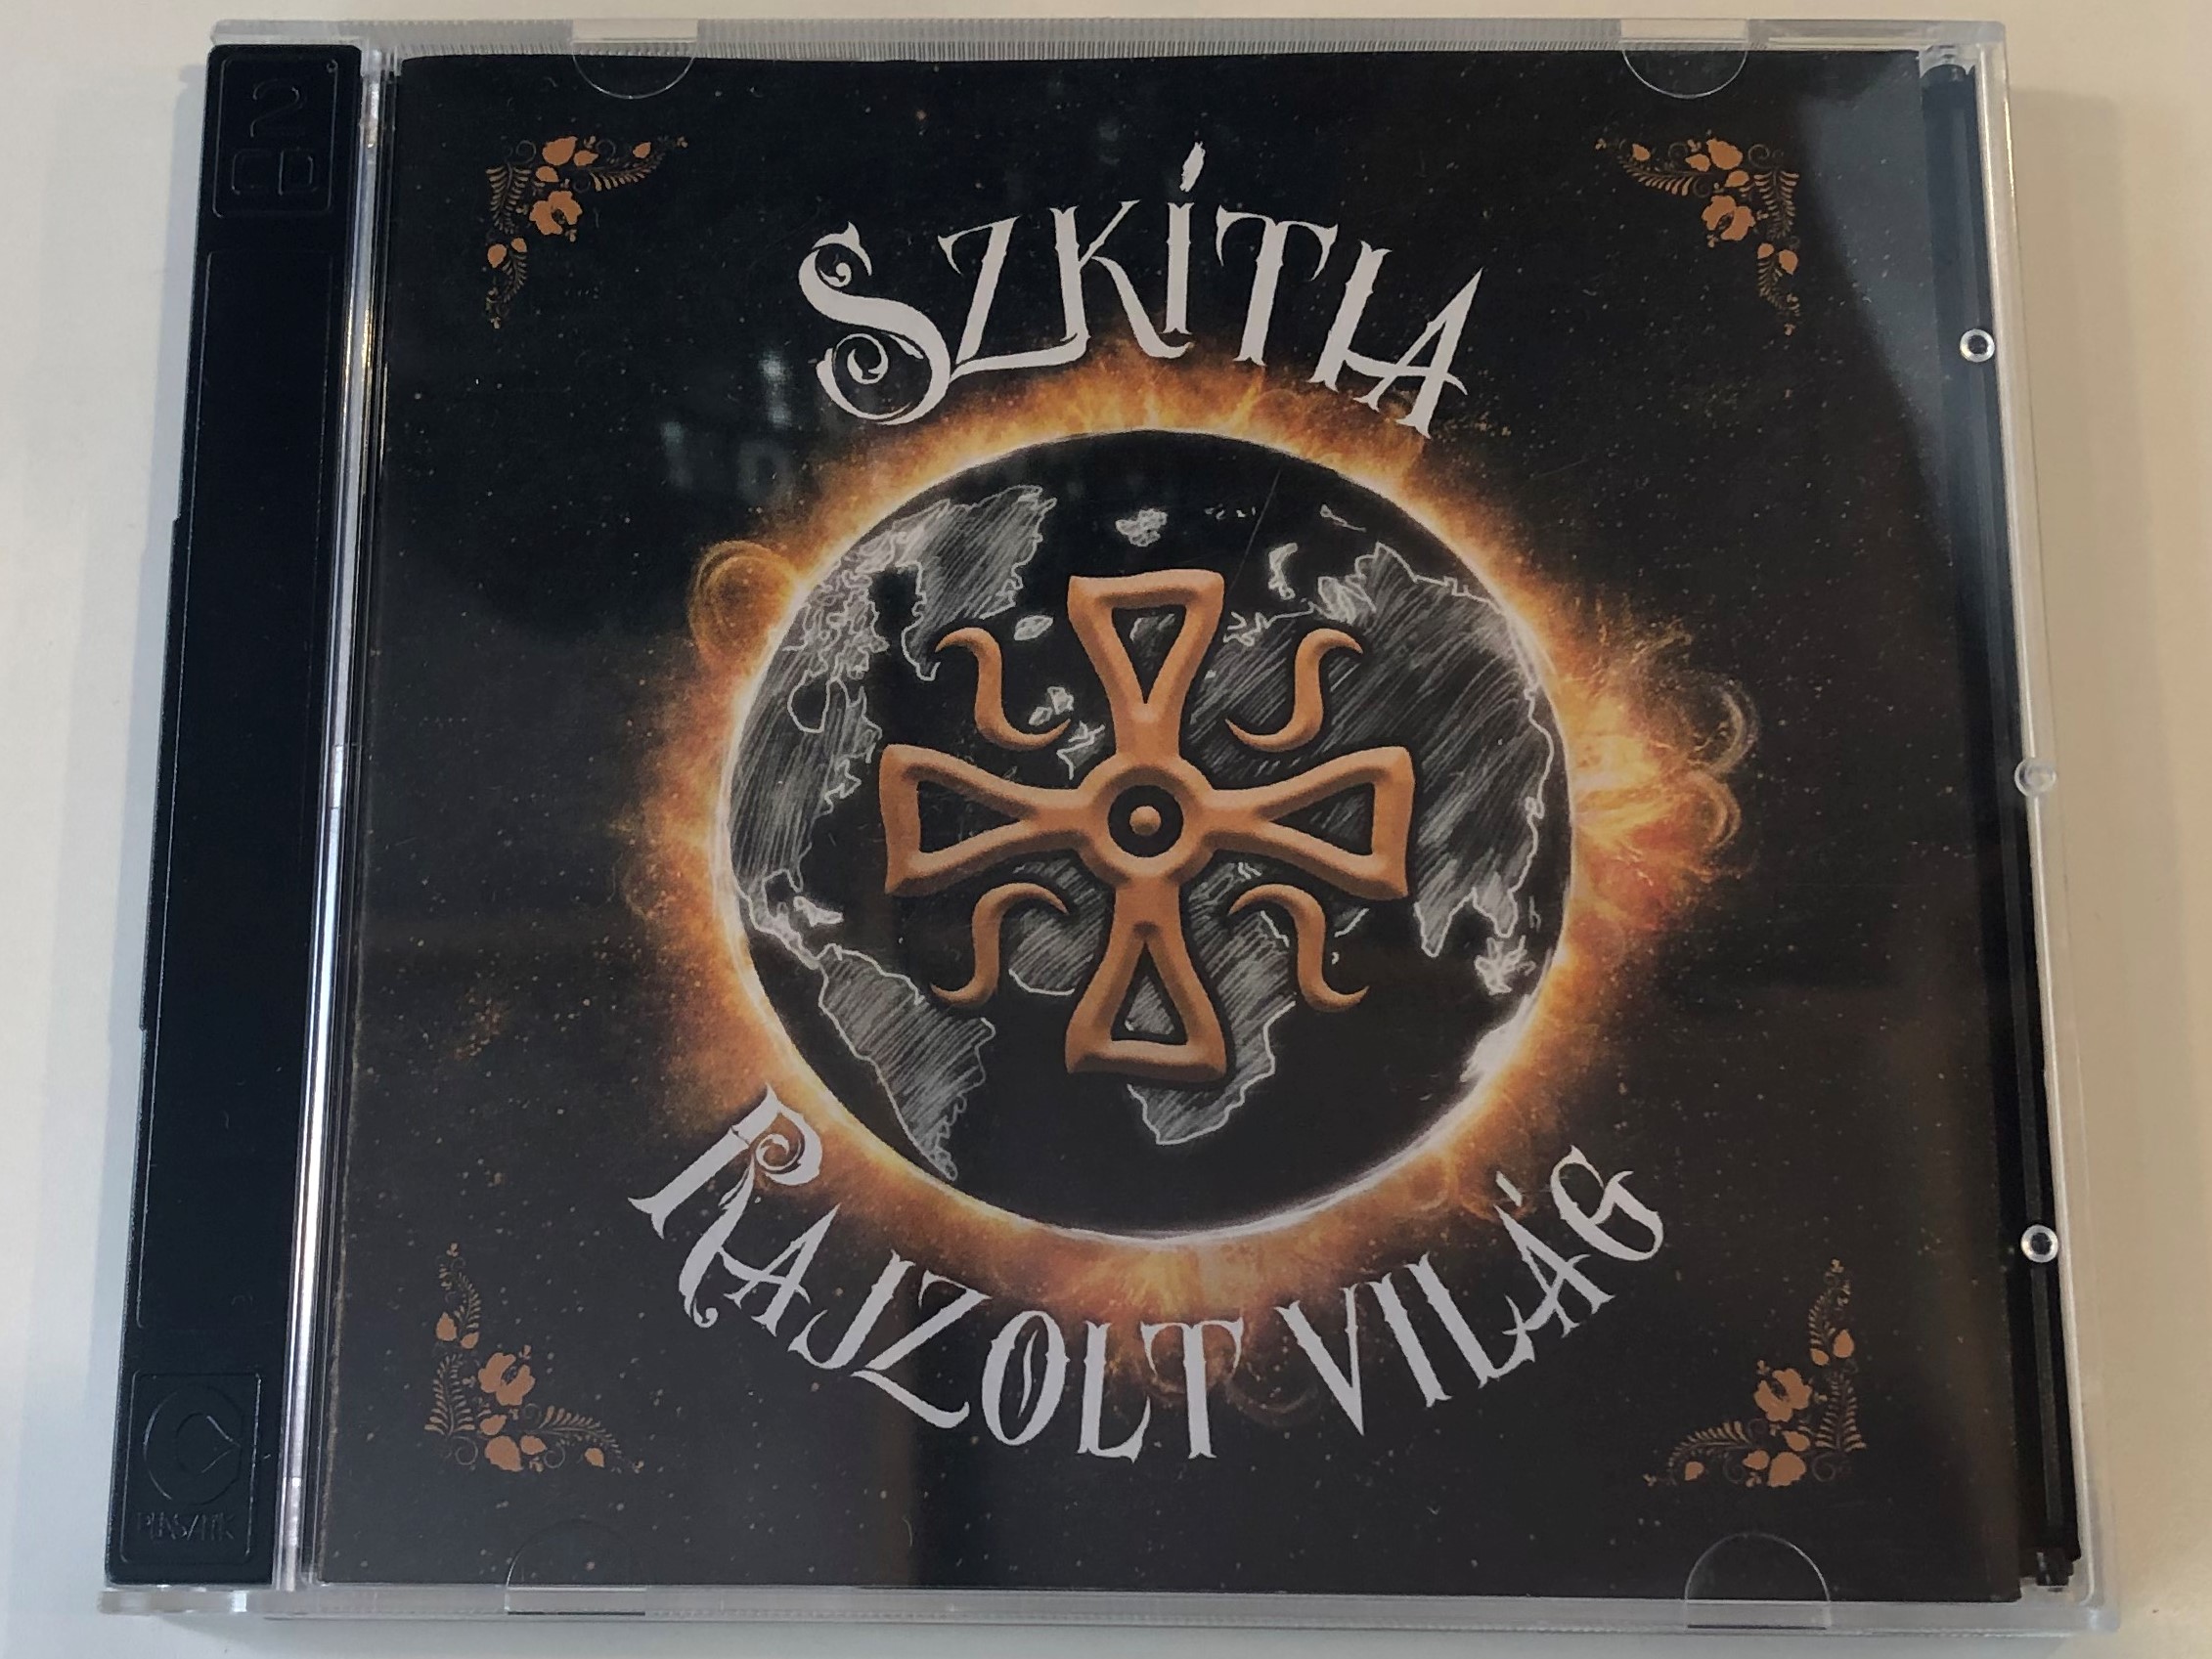 szk-tia-rajzolt-vil-g-nail-records-audio-cd-2017-nailcd-273-1-.jpg